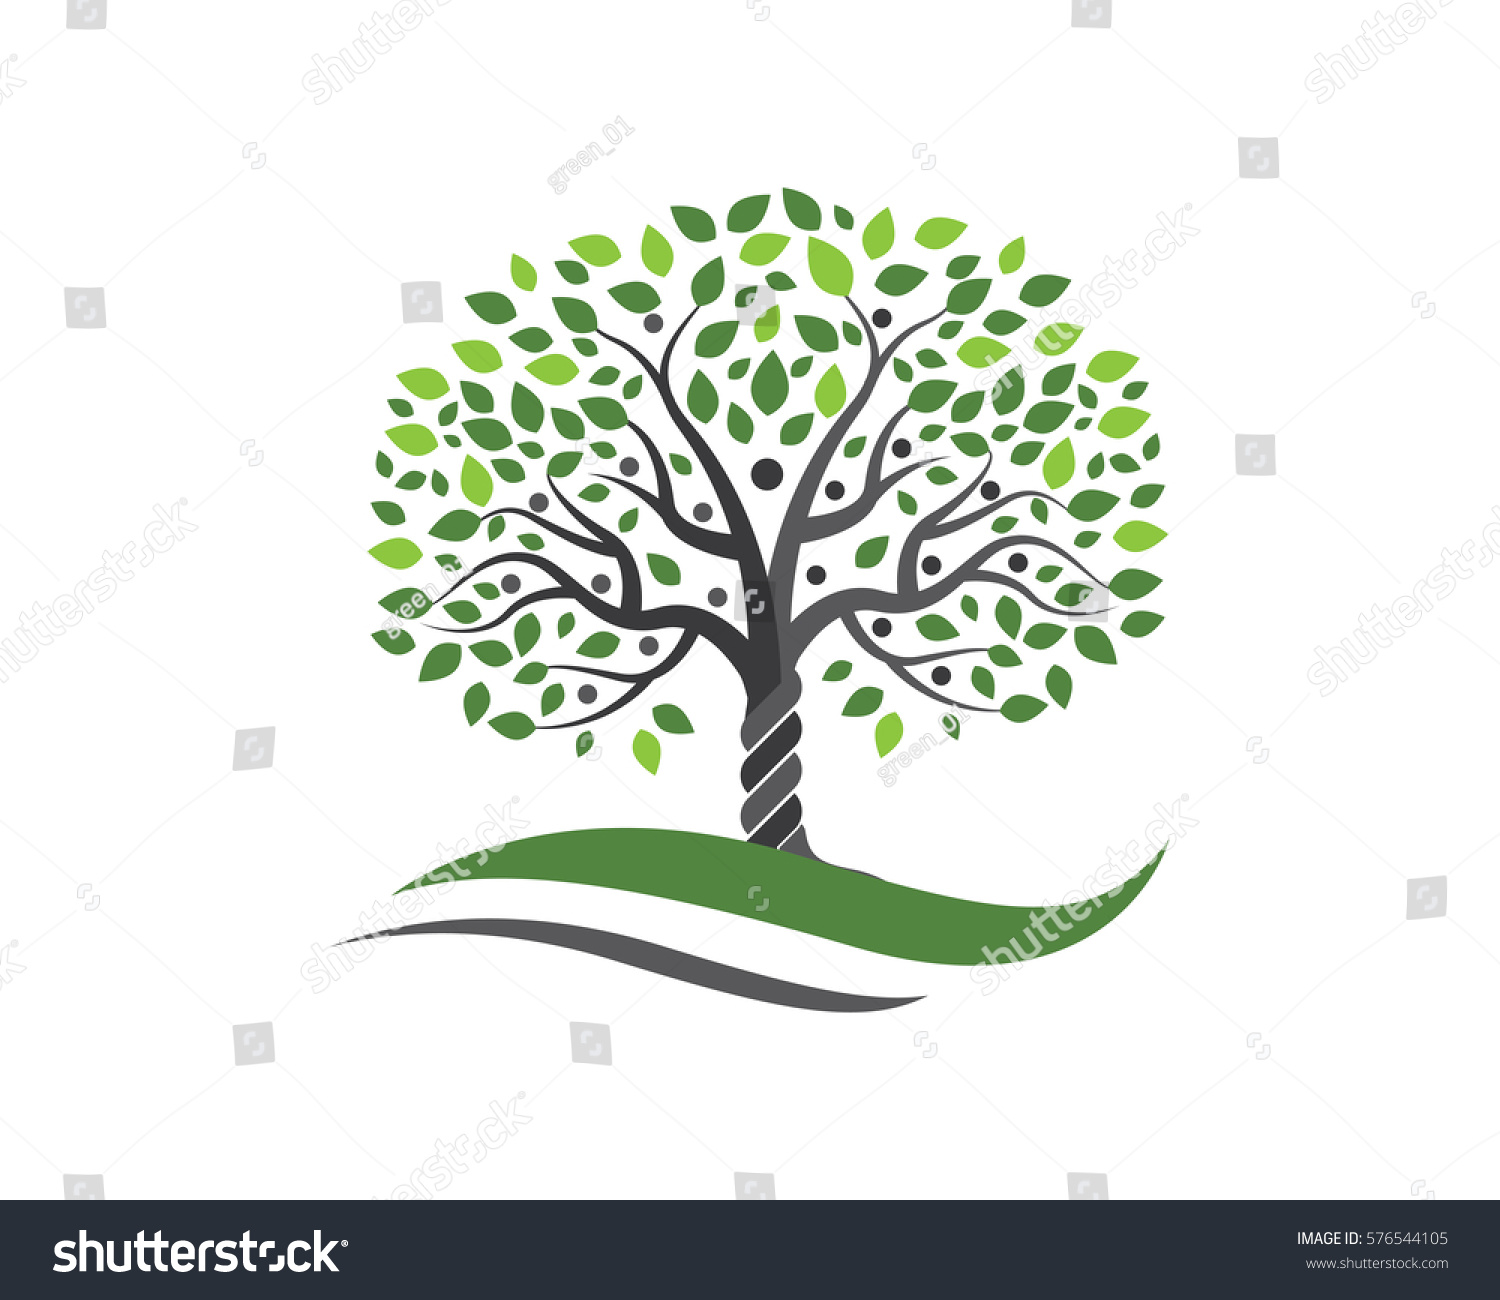 Edit Vectors Free Online - family tree | Shutterstock Editor